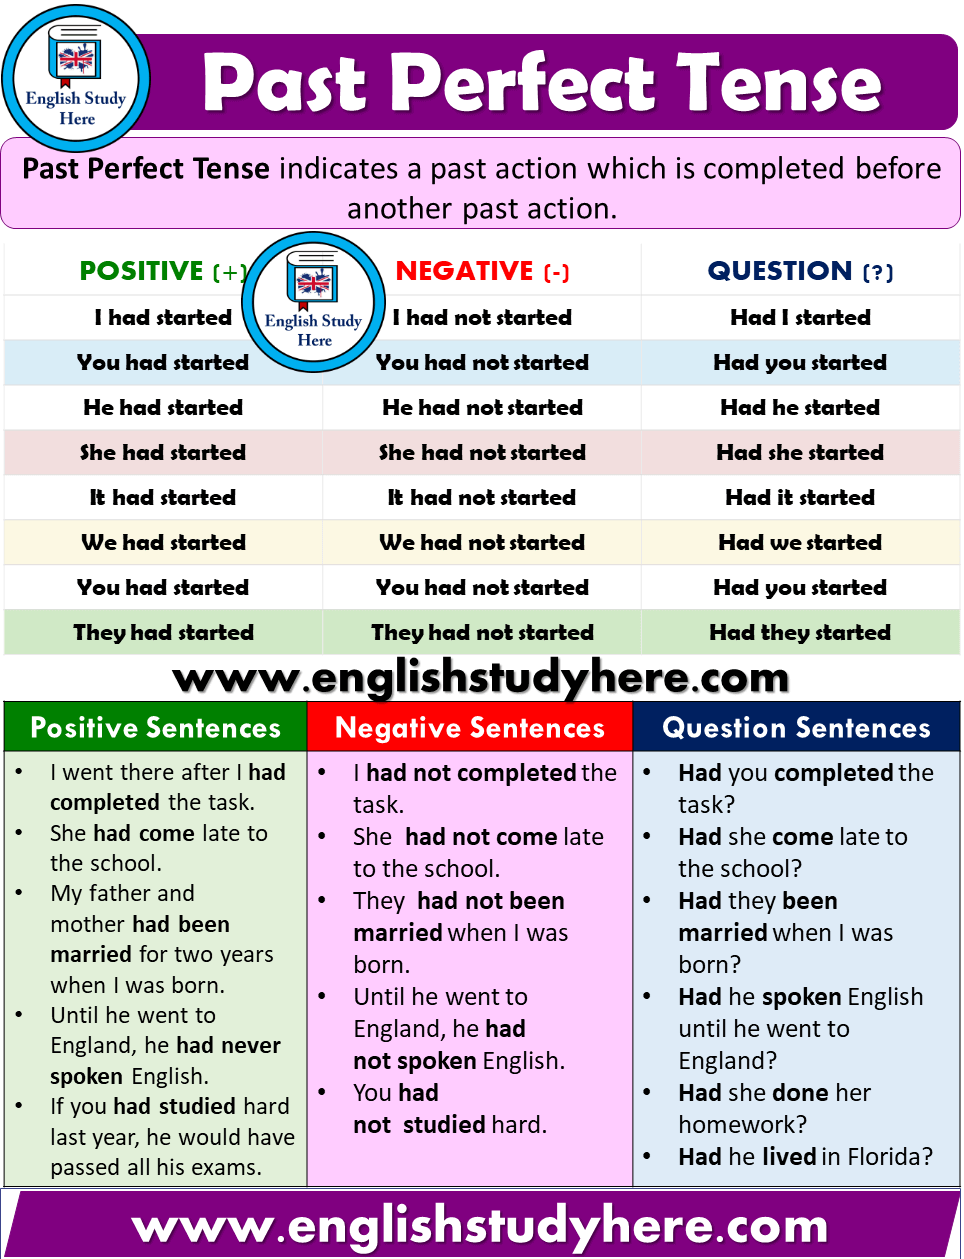 Past perfect tense глаголы. Past perfect в английском. Study past perfect. Study в паст Перфект. Past perfect positive.